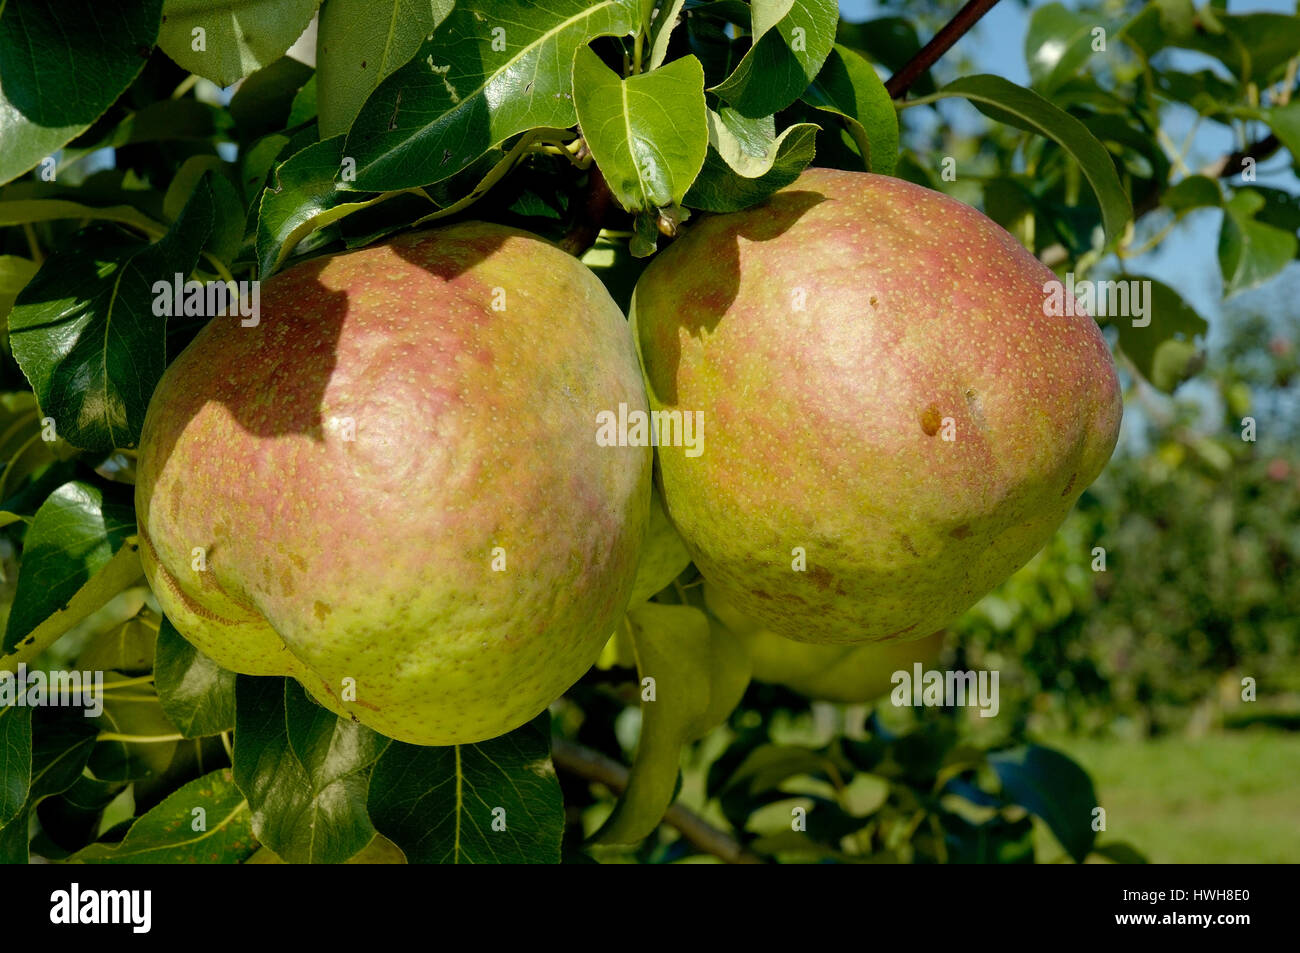 Pears on tree, Pyrus communis pears in the tree rose plants, Pears on tree / (Pyrus communis) / Birnen am Baum / Rosengewaechse Stock Photo